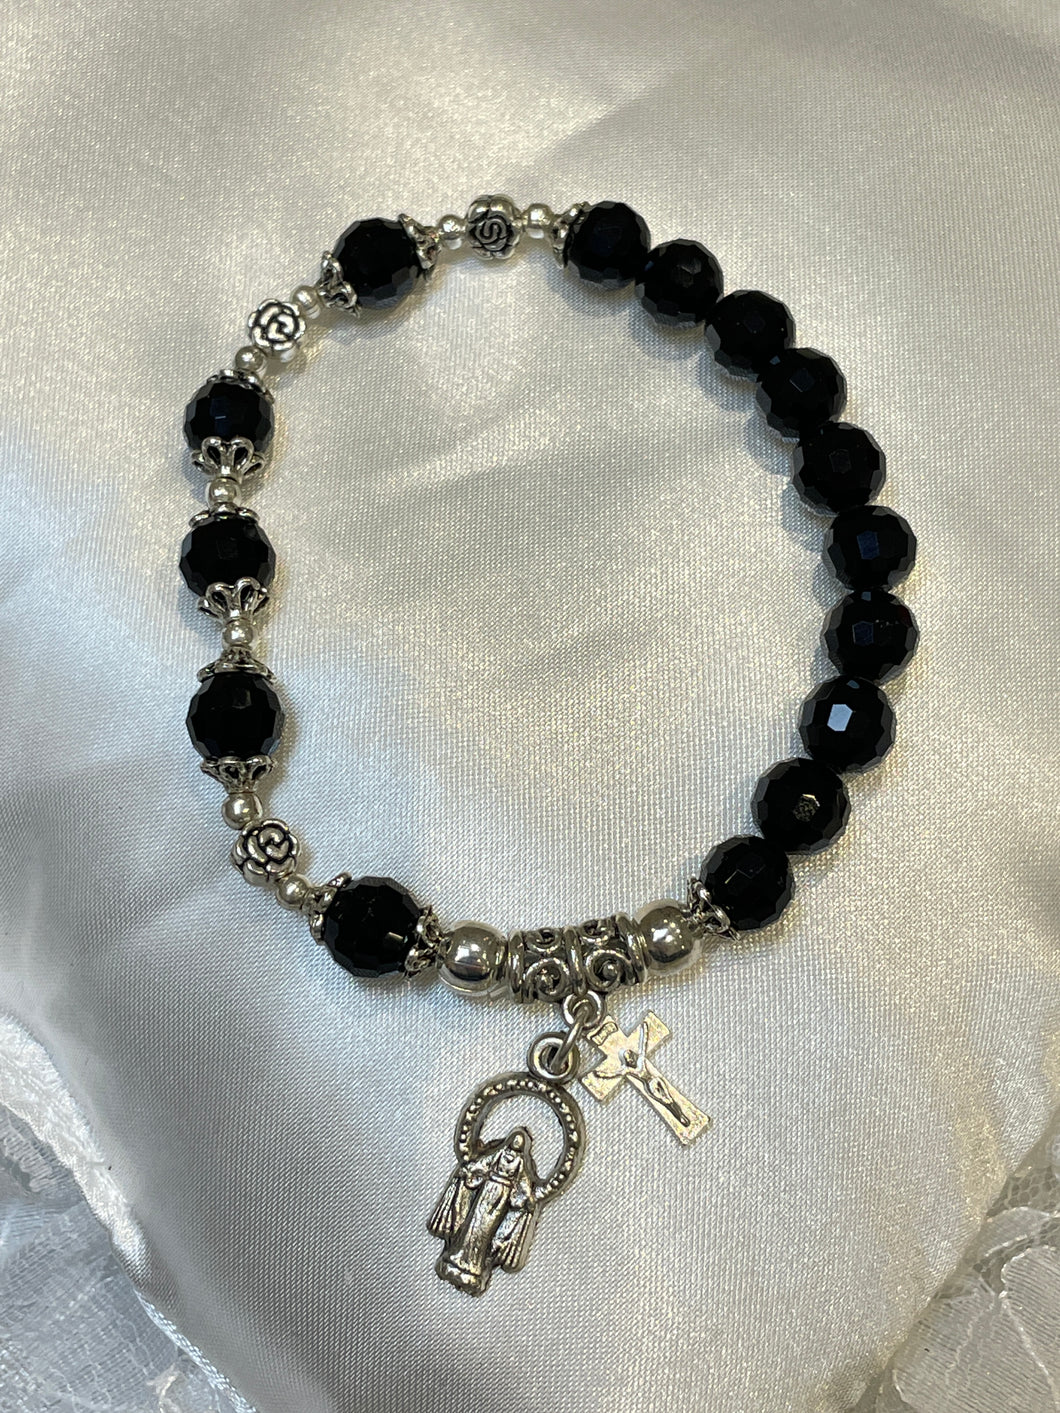 Black Gemstone Rosary Bracelet with Charms